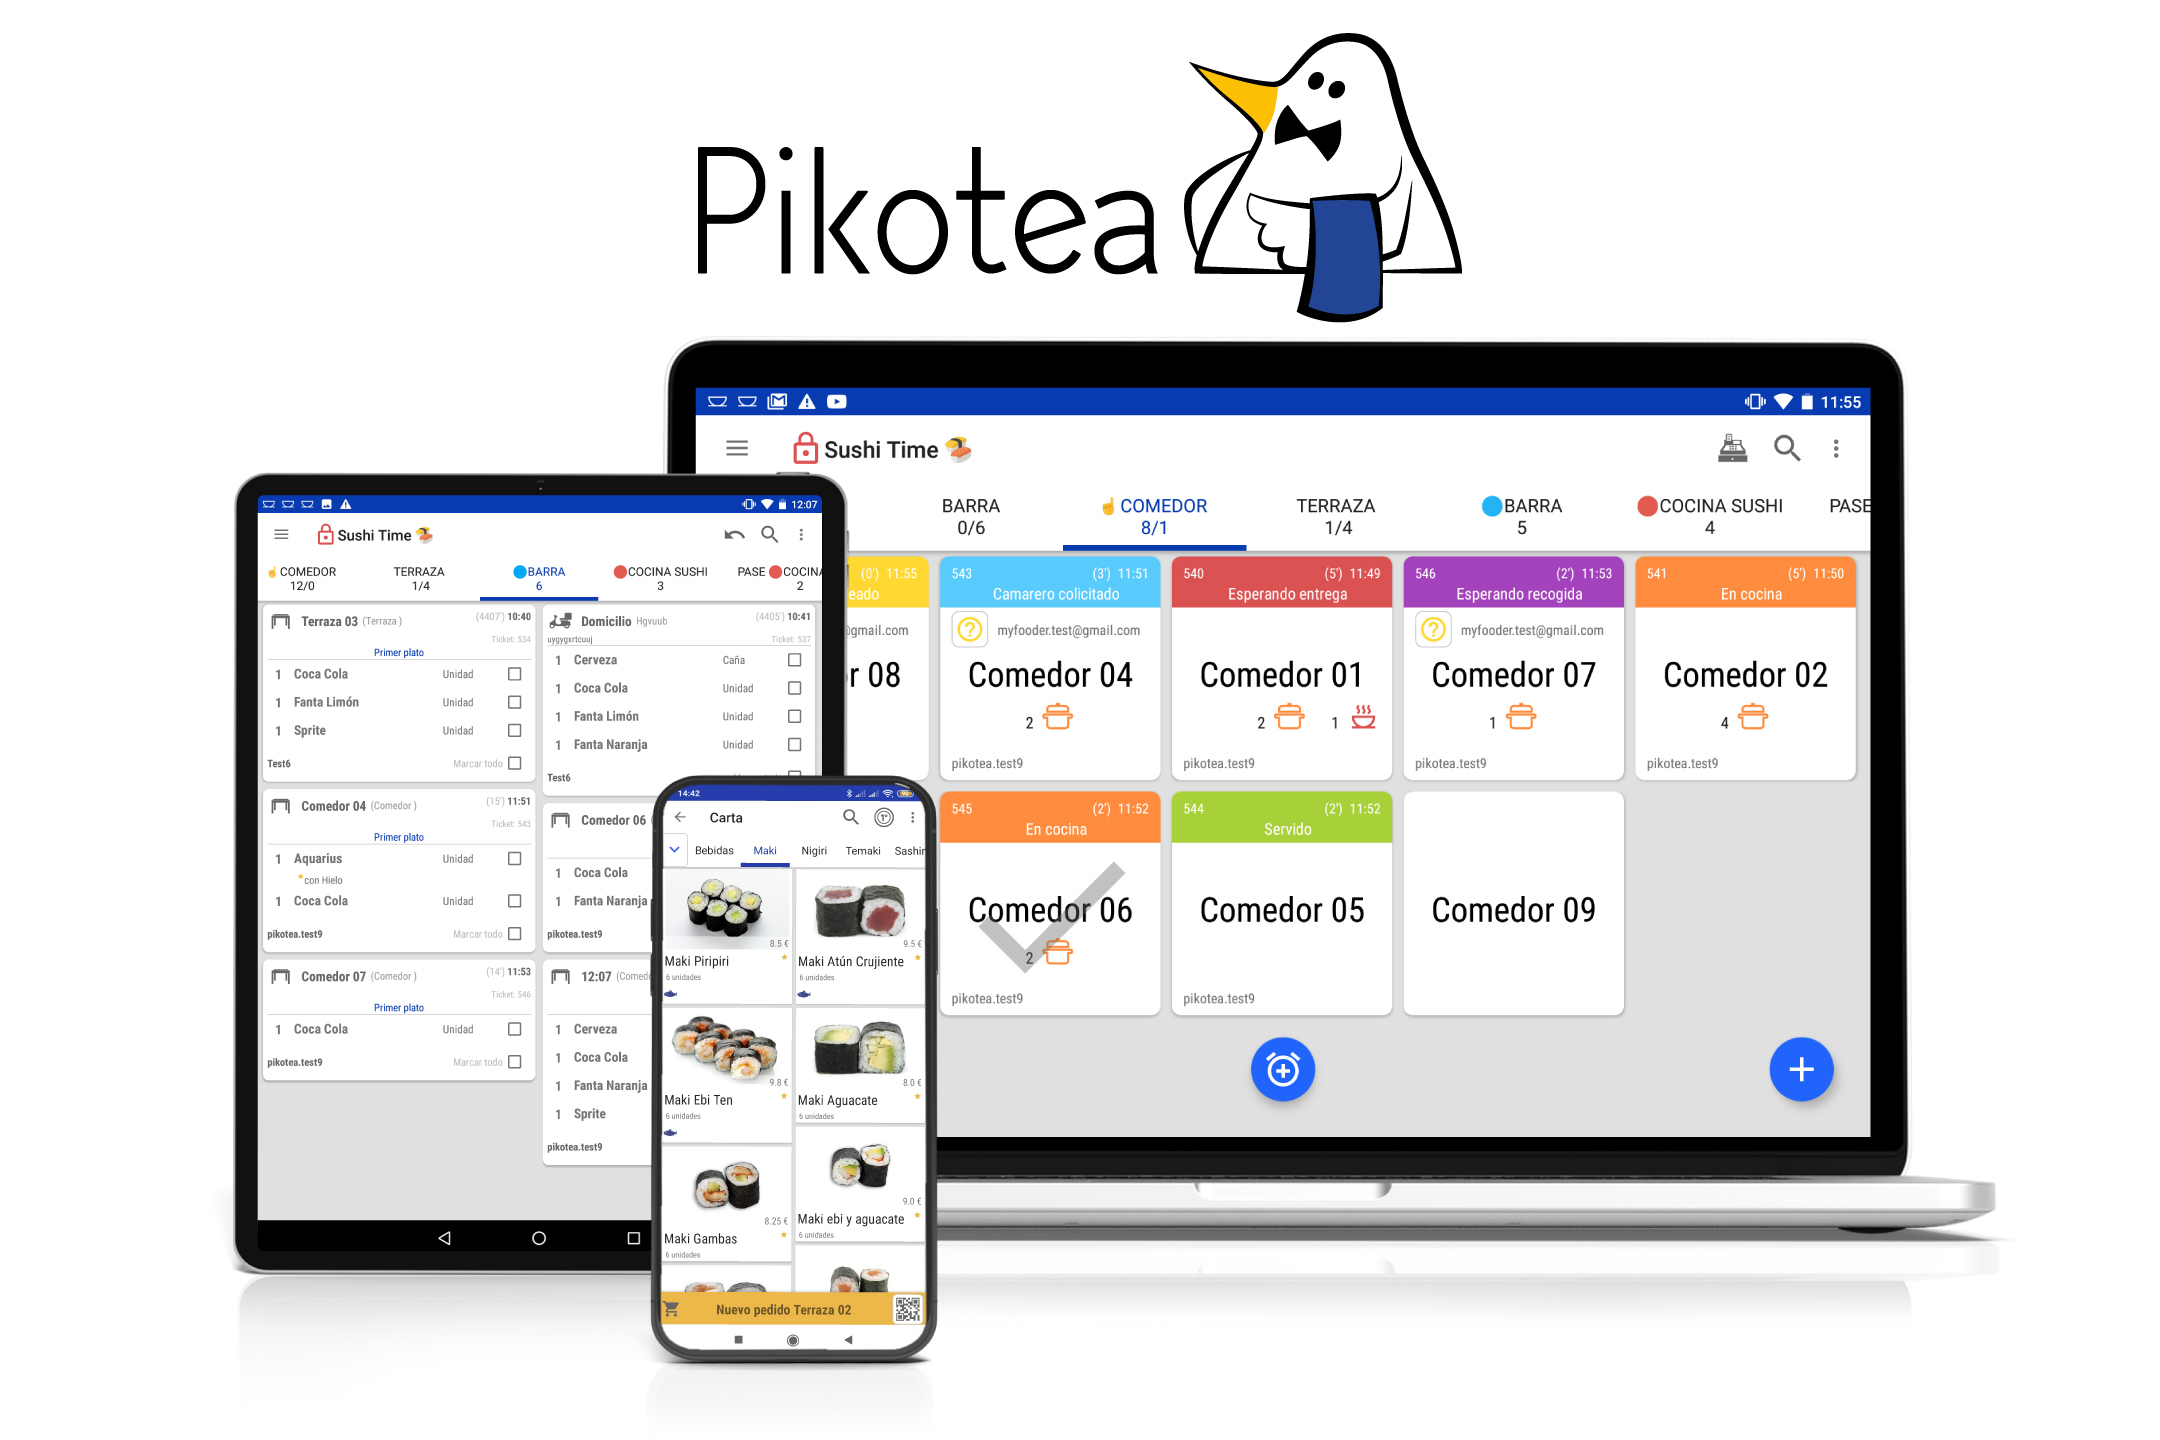 La app de Pikotea.